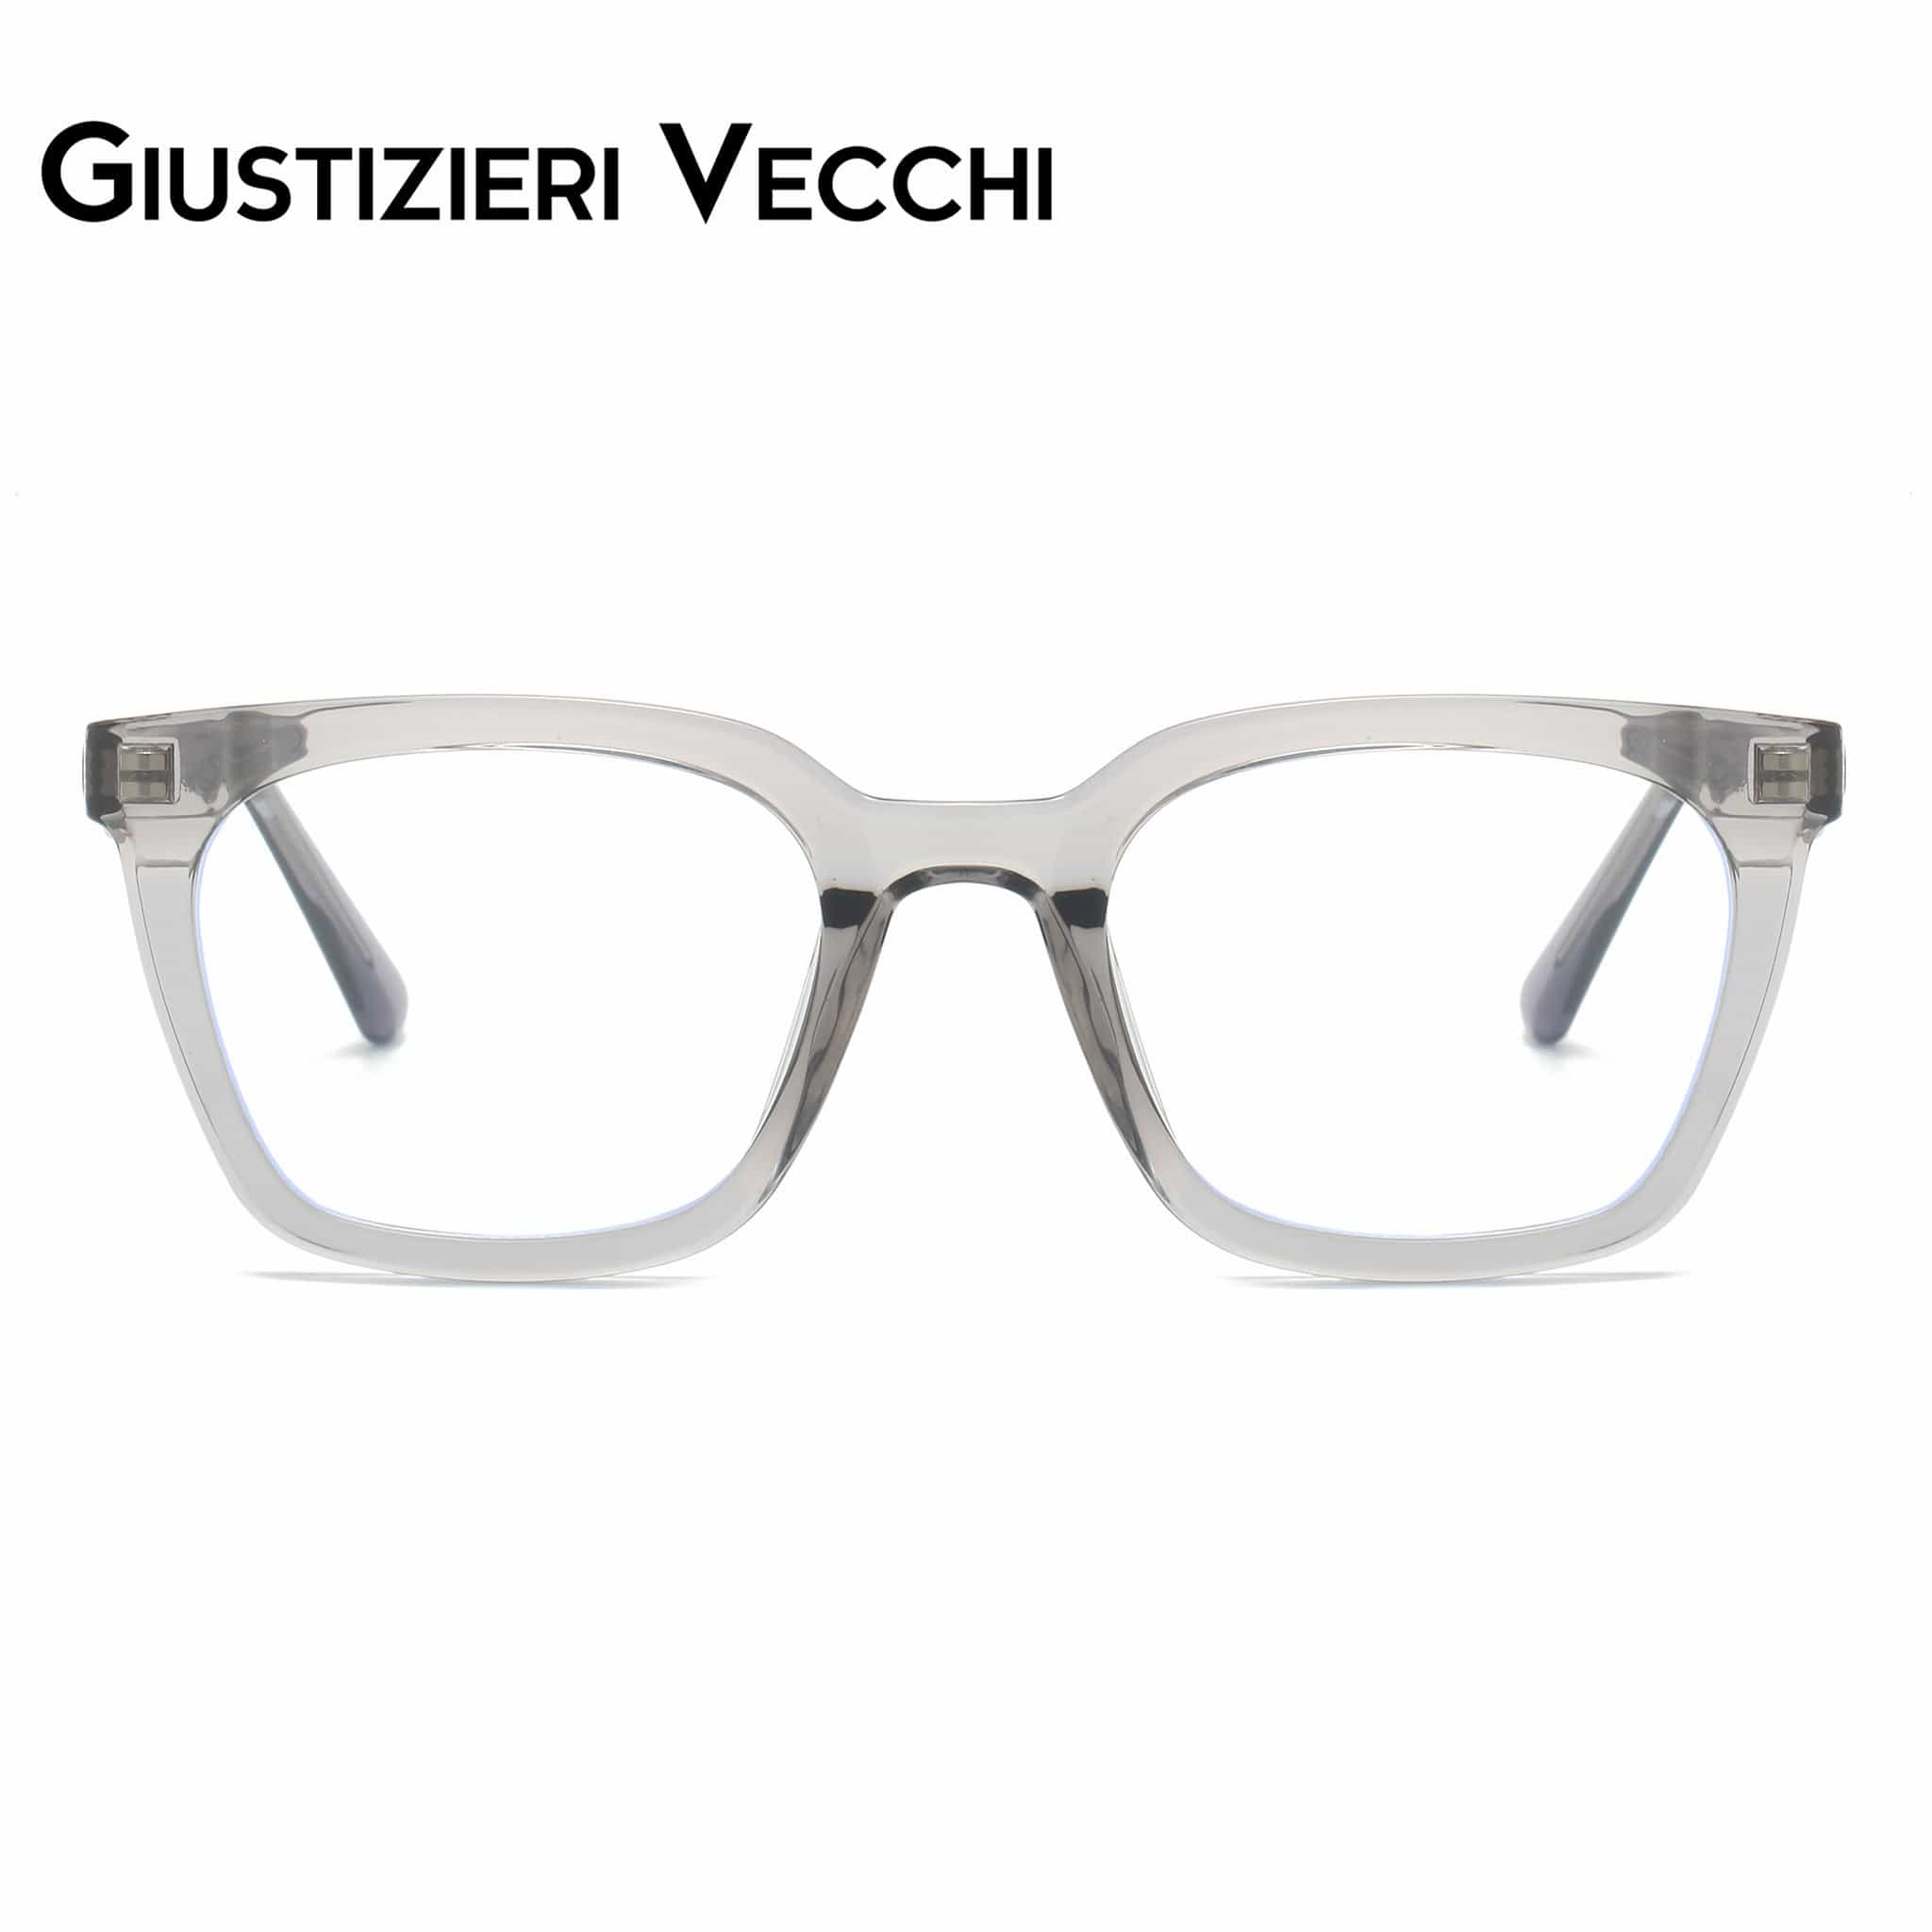 GIUSTIZIERI VECCHI Eyeglasses Medium / Sea Glass Grey PhantomPulse Duo